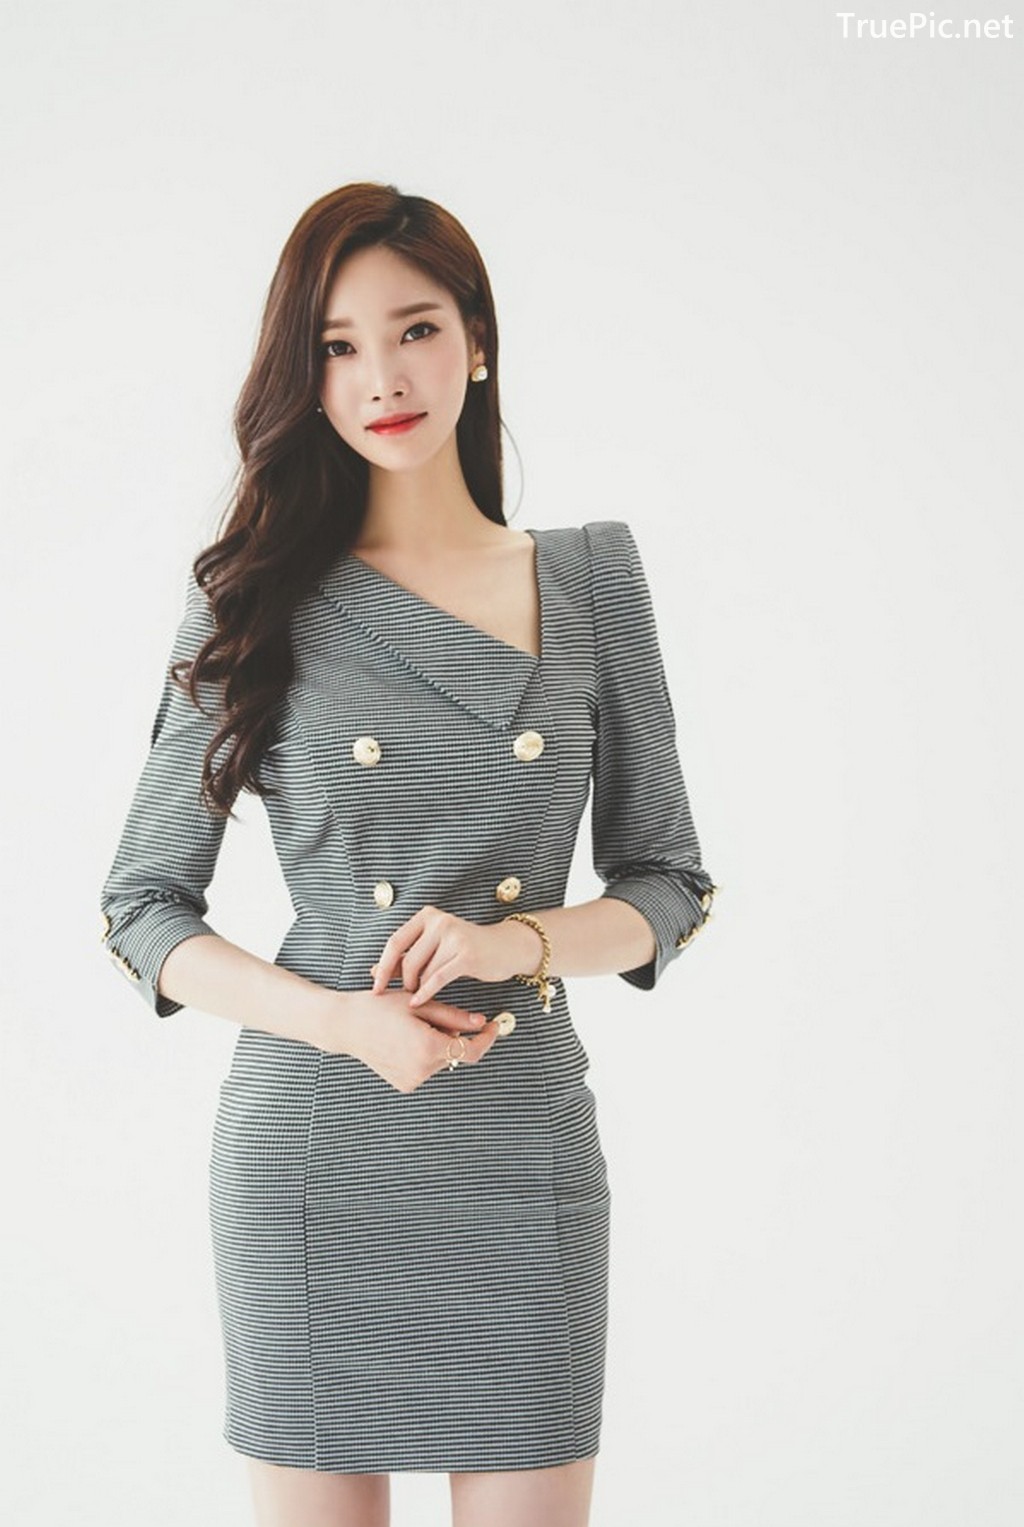 Image Korean Beautiful Model – Park Jung Yoon – Fashion Photography #2 - TruePic.net - Picture-51